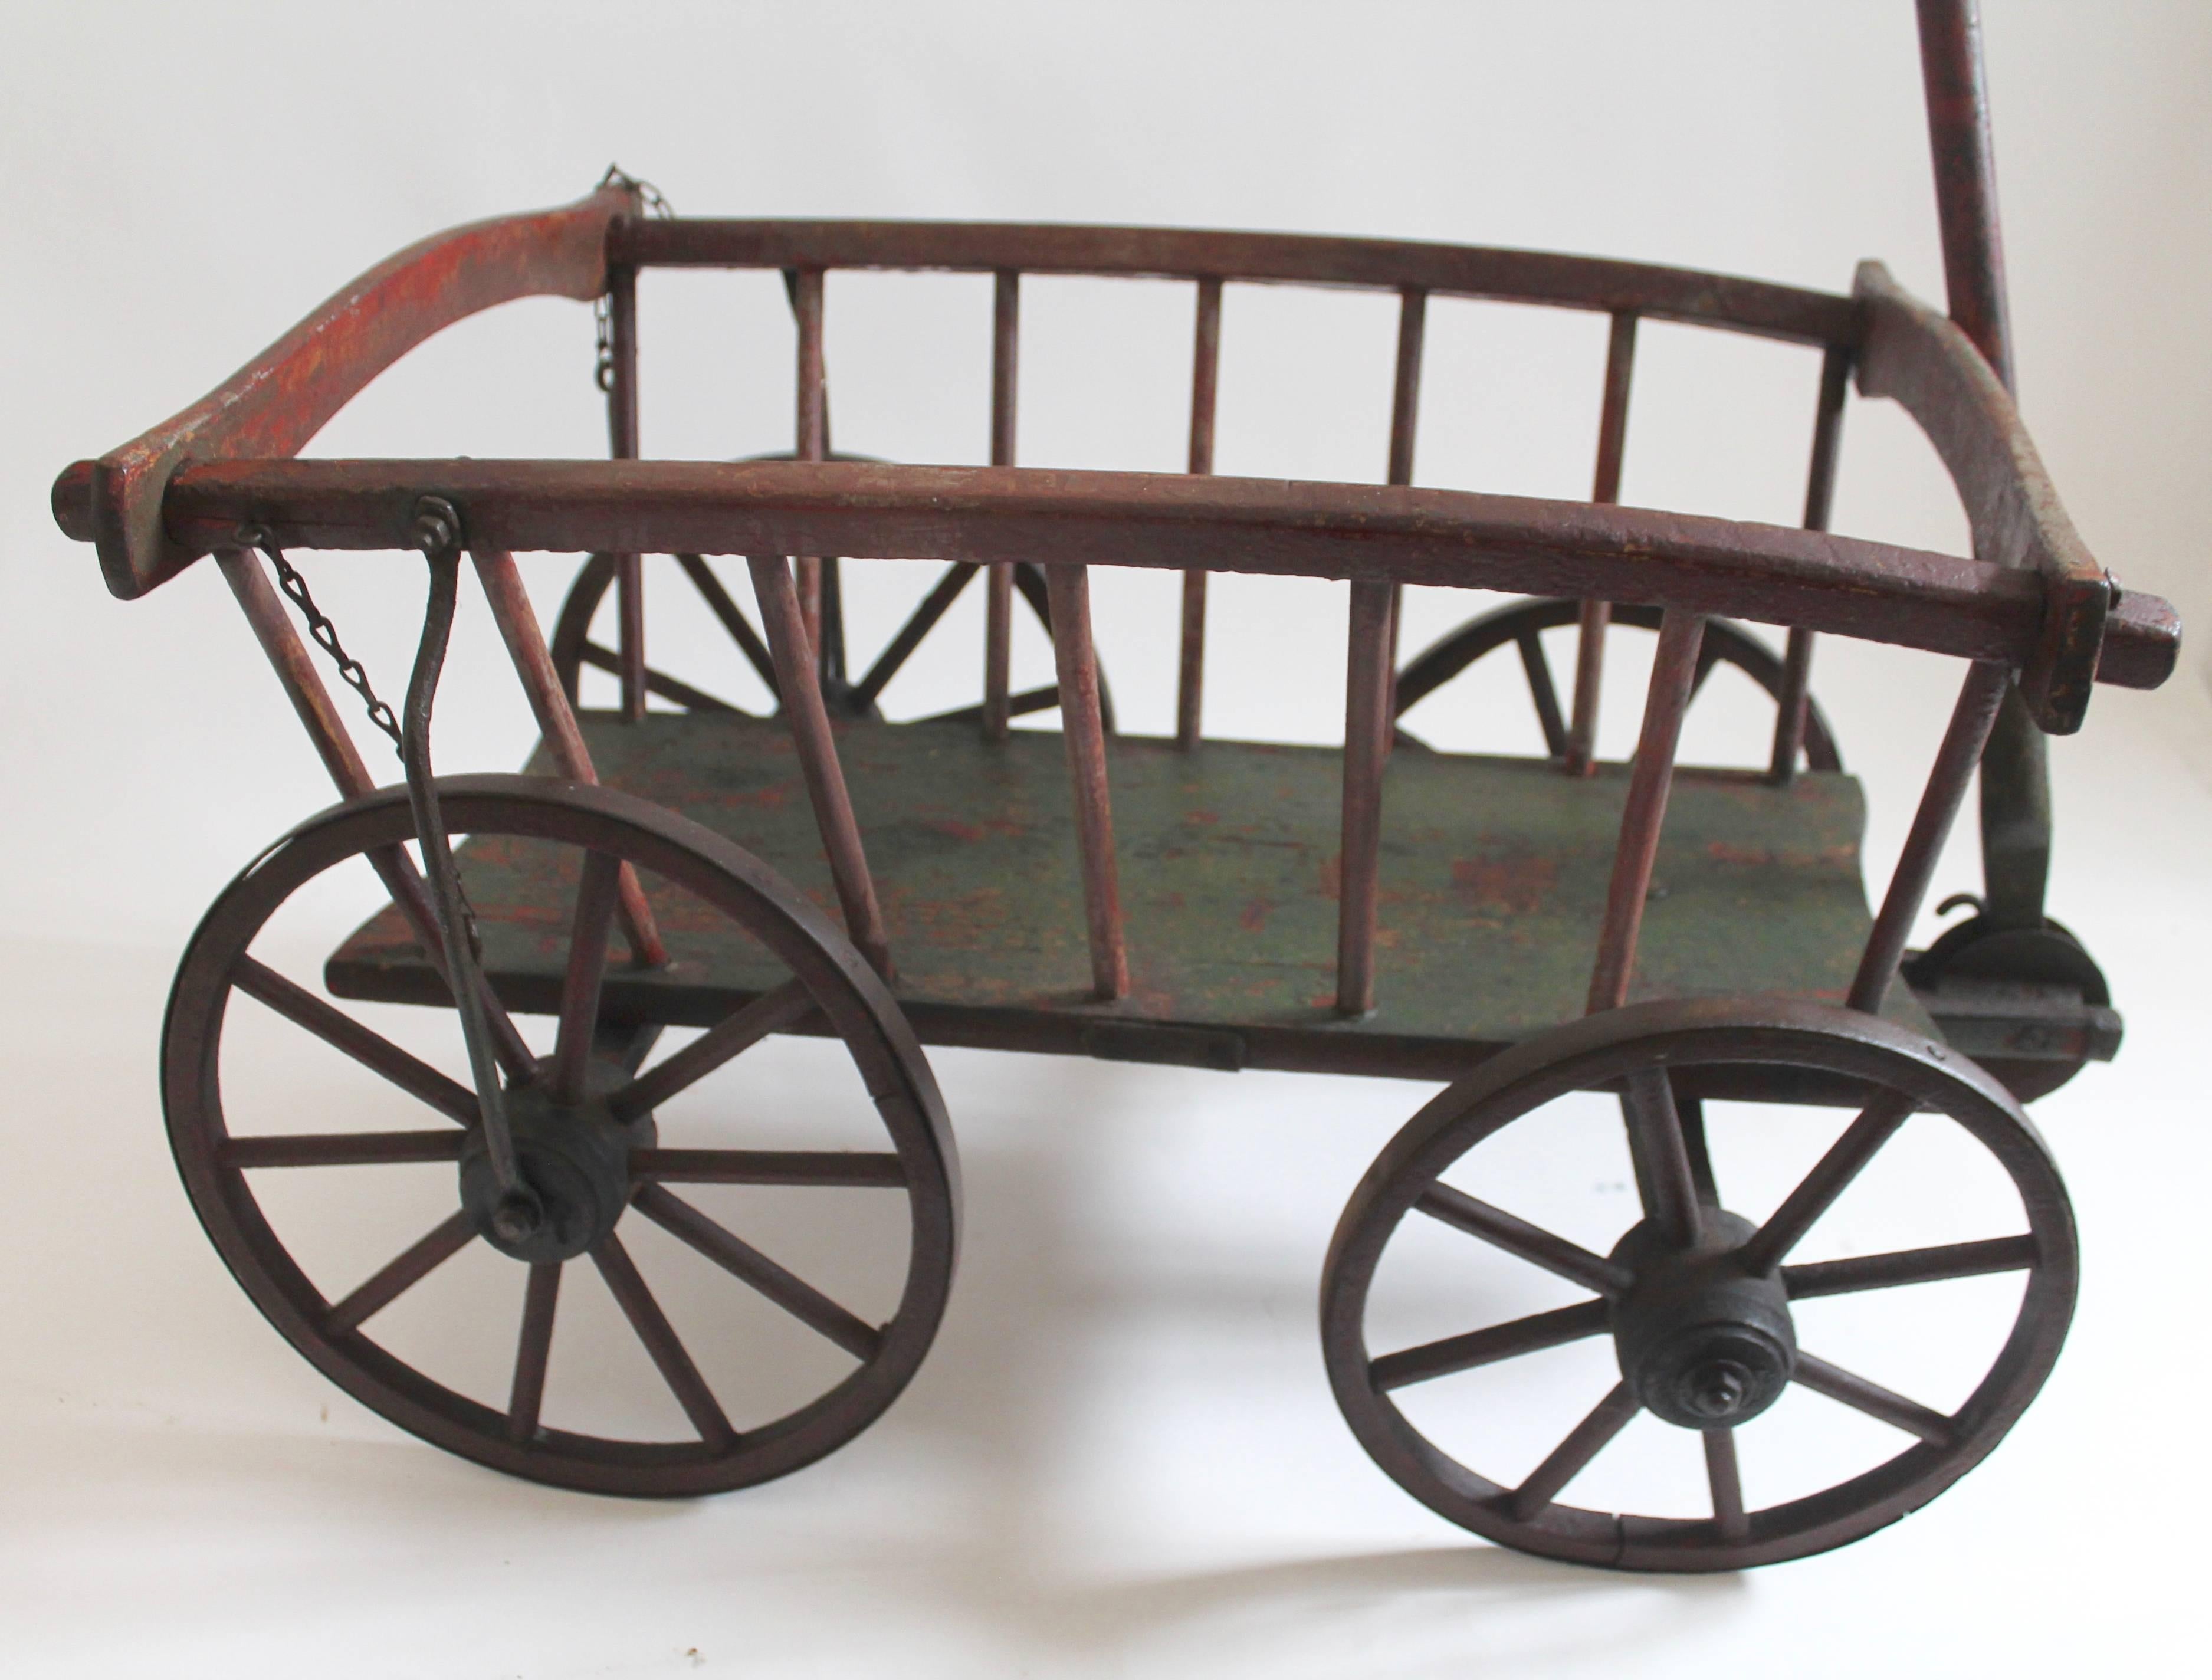 19th century wagon